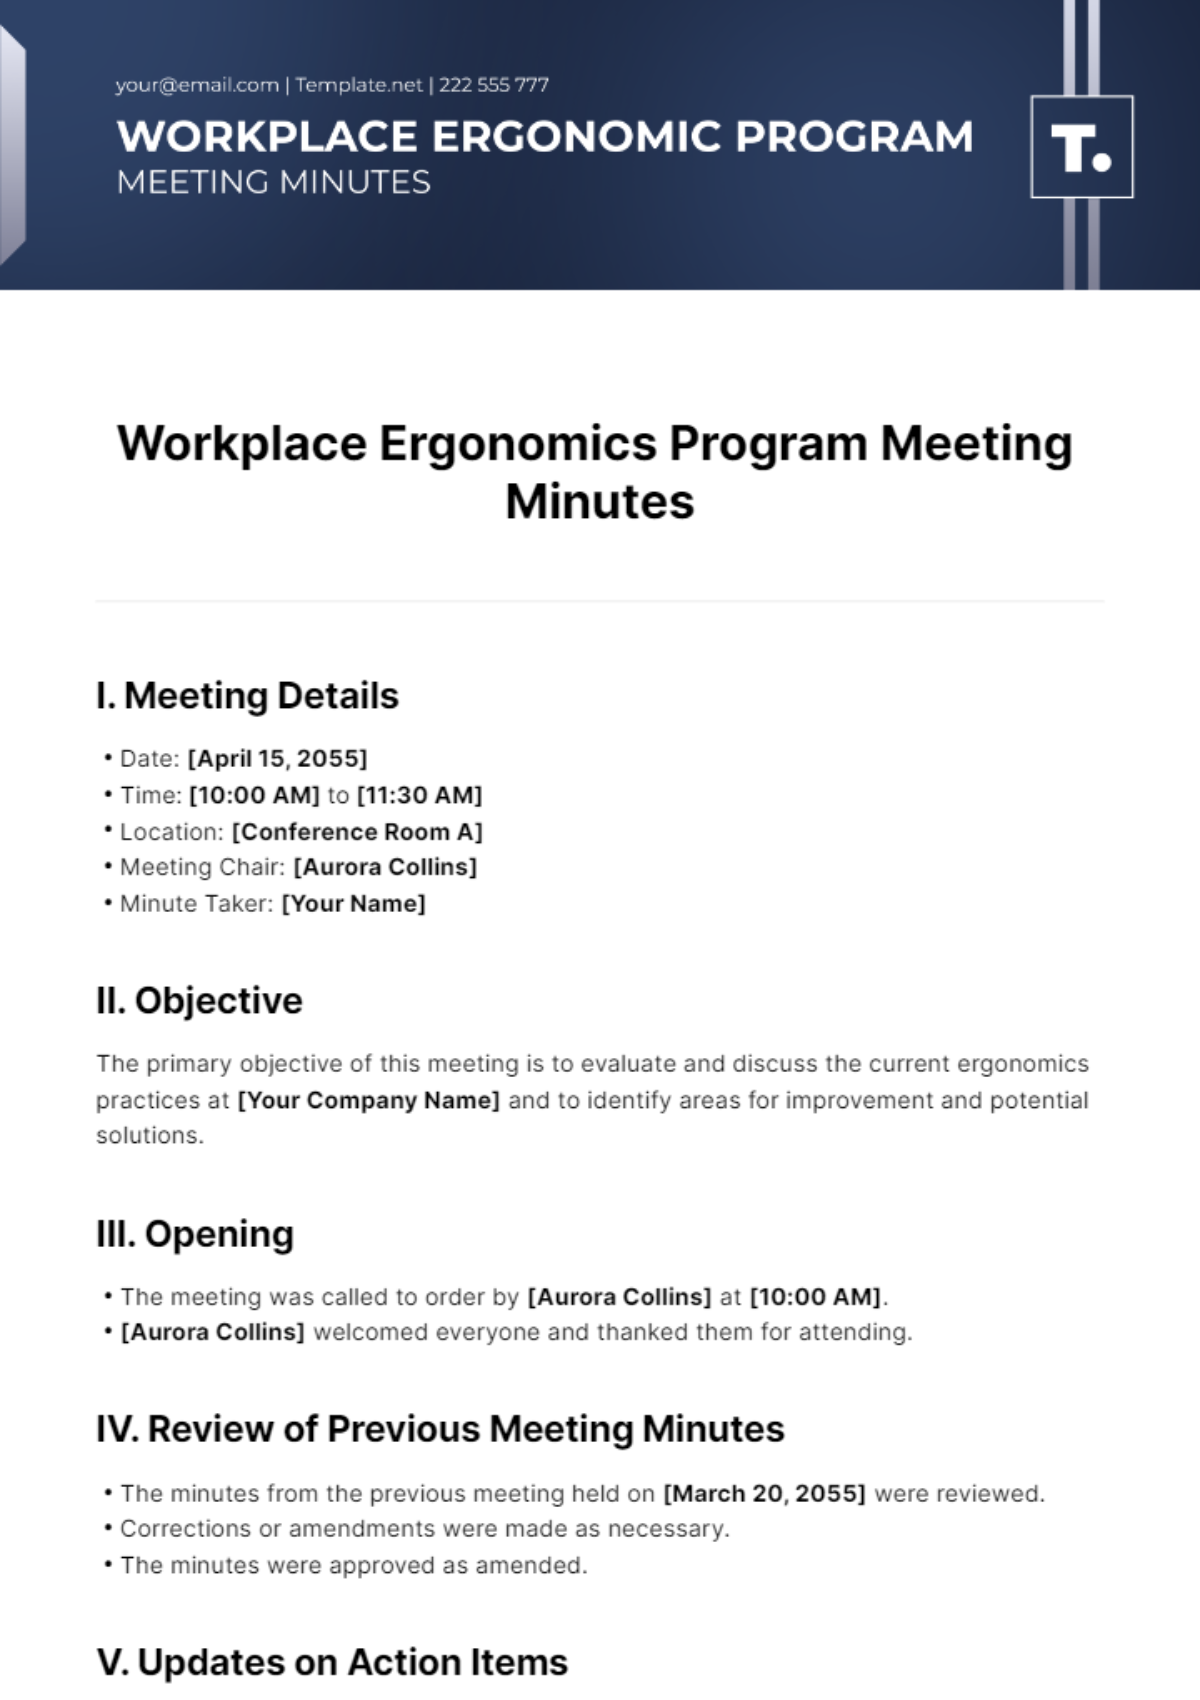 Workplace Ergonomics Program Meeting Minutes Template